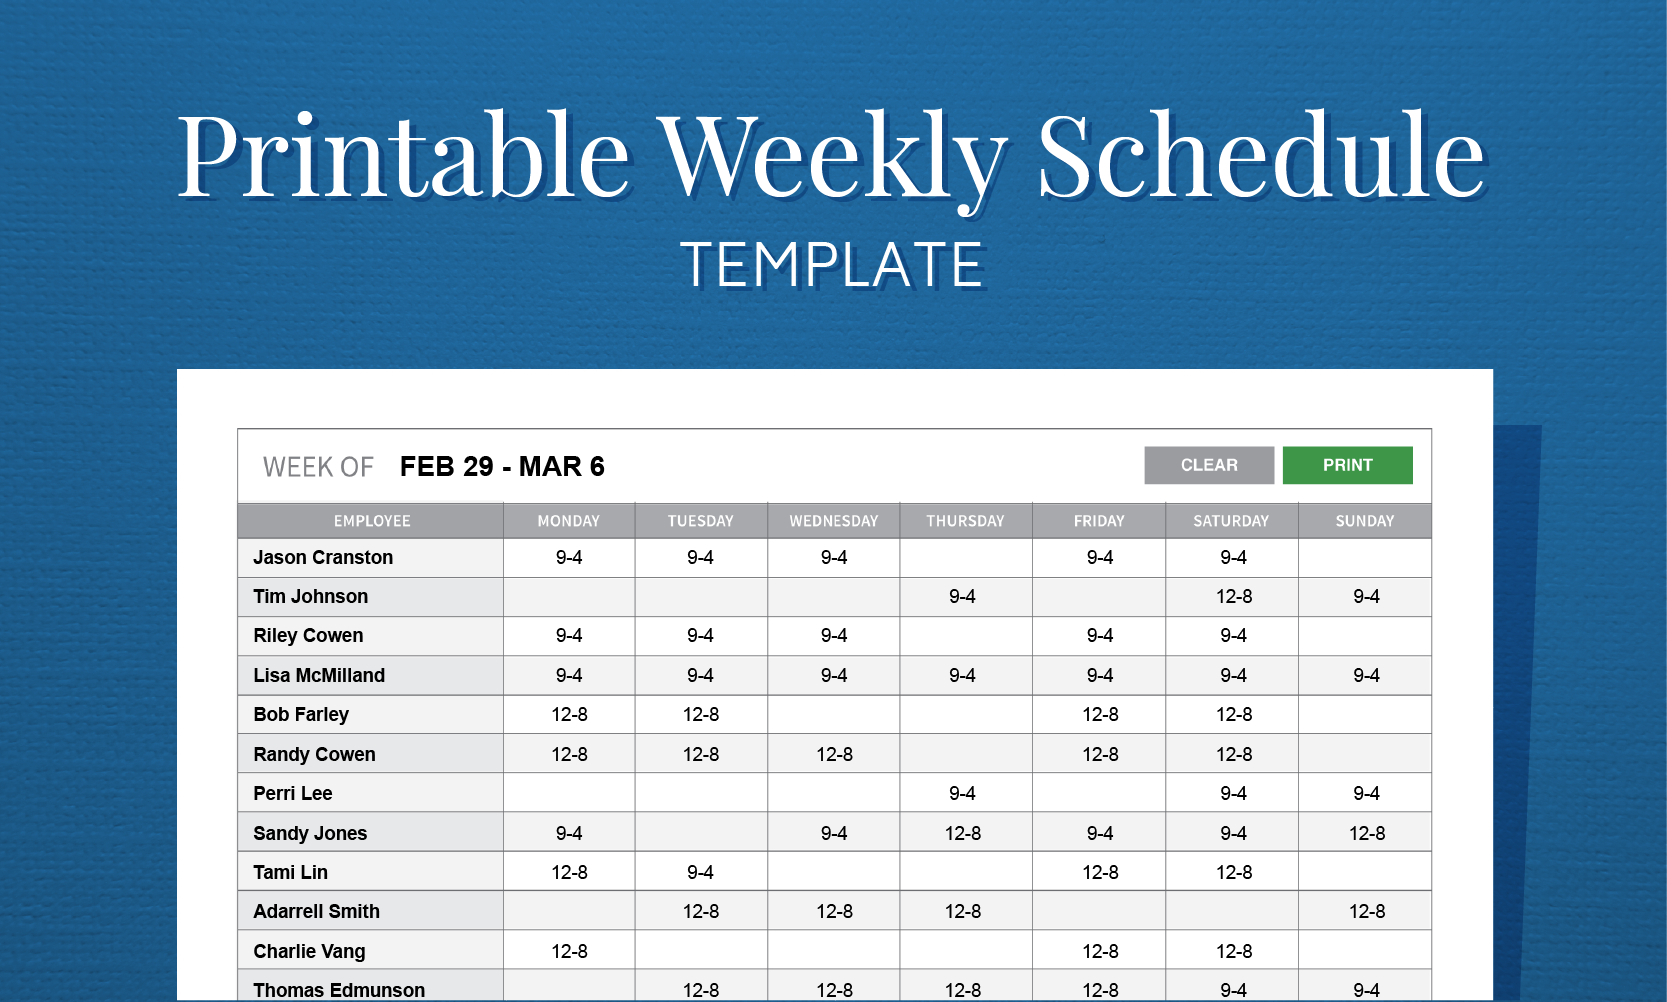 Free Printable Weekly Work Schedule Template For Employee Scheduling - Free Printable Weekly Work Schedule